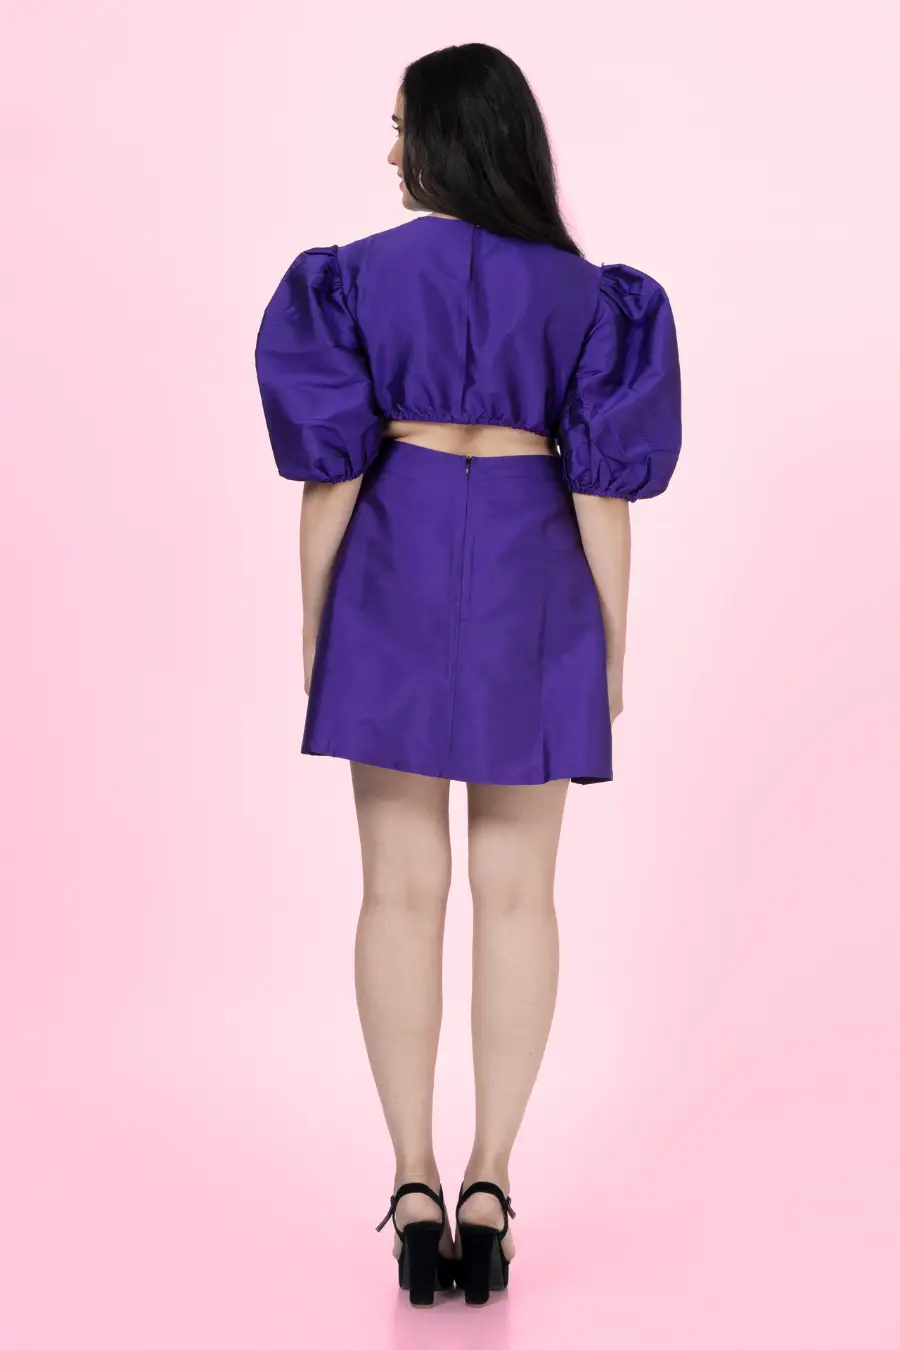 'Tori' Cutout Ring Detail Dress Sewing Pattern